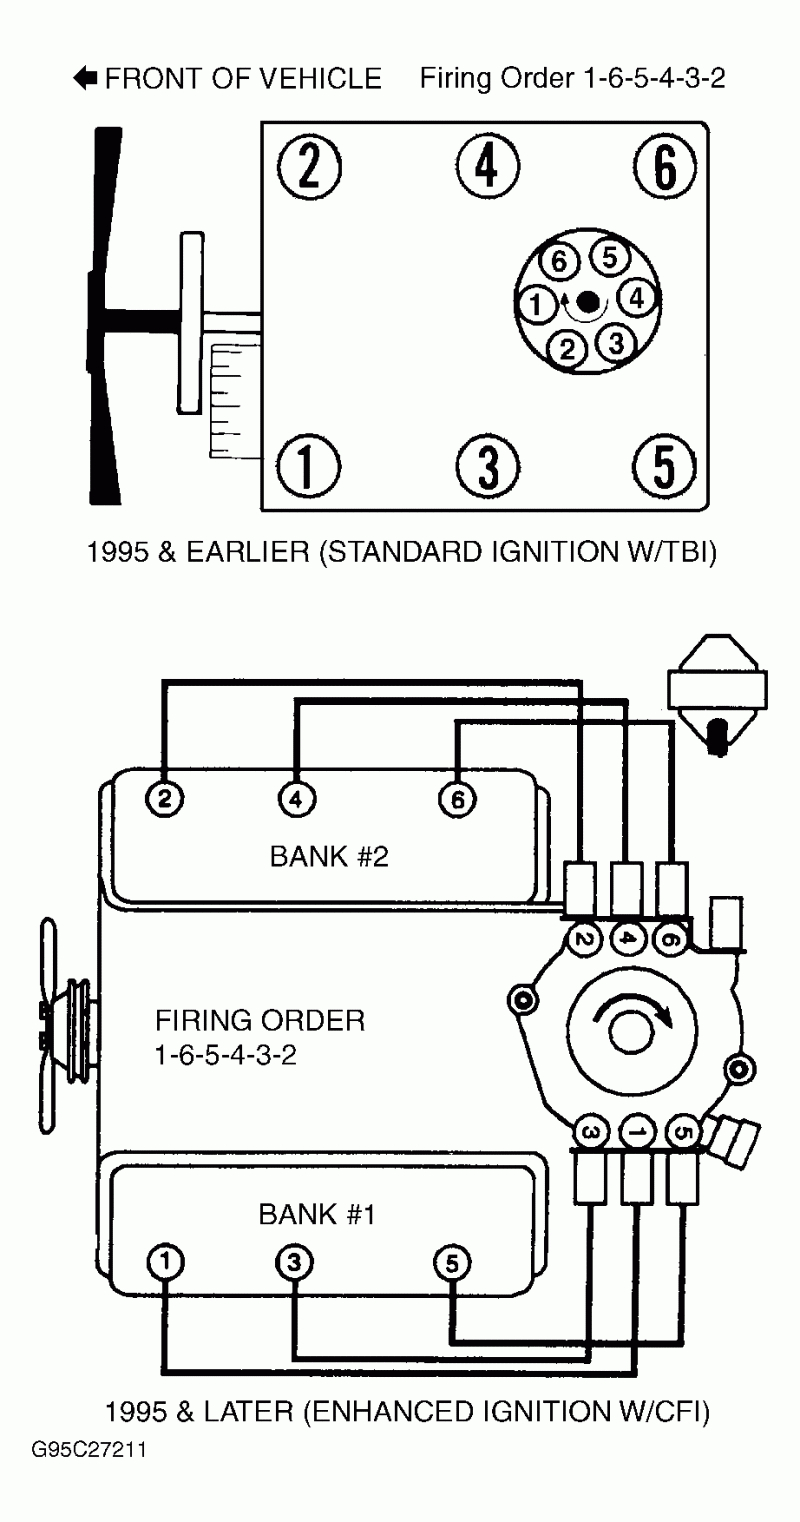 Ny_5745] Spark Plug Wiring To Distributor Cap Firing Order